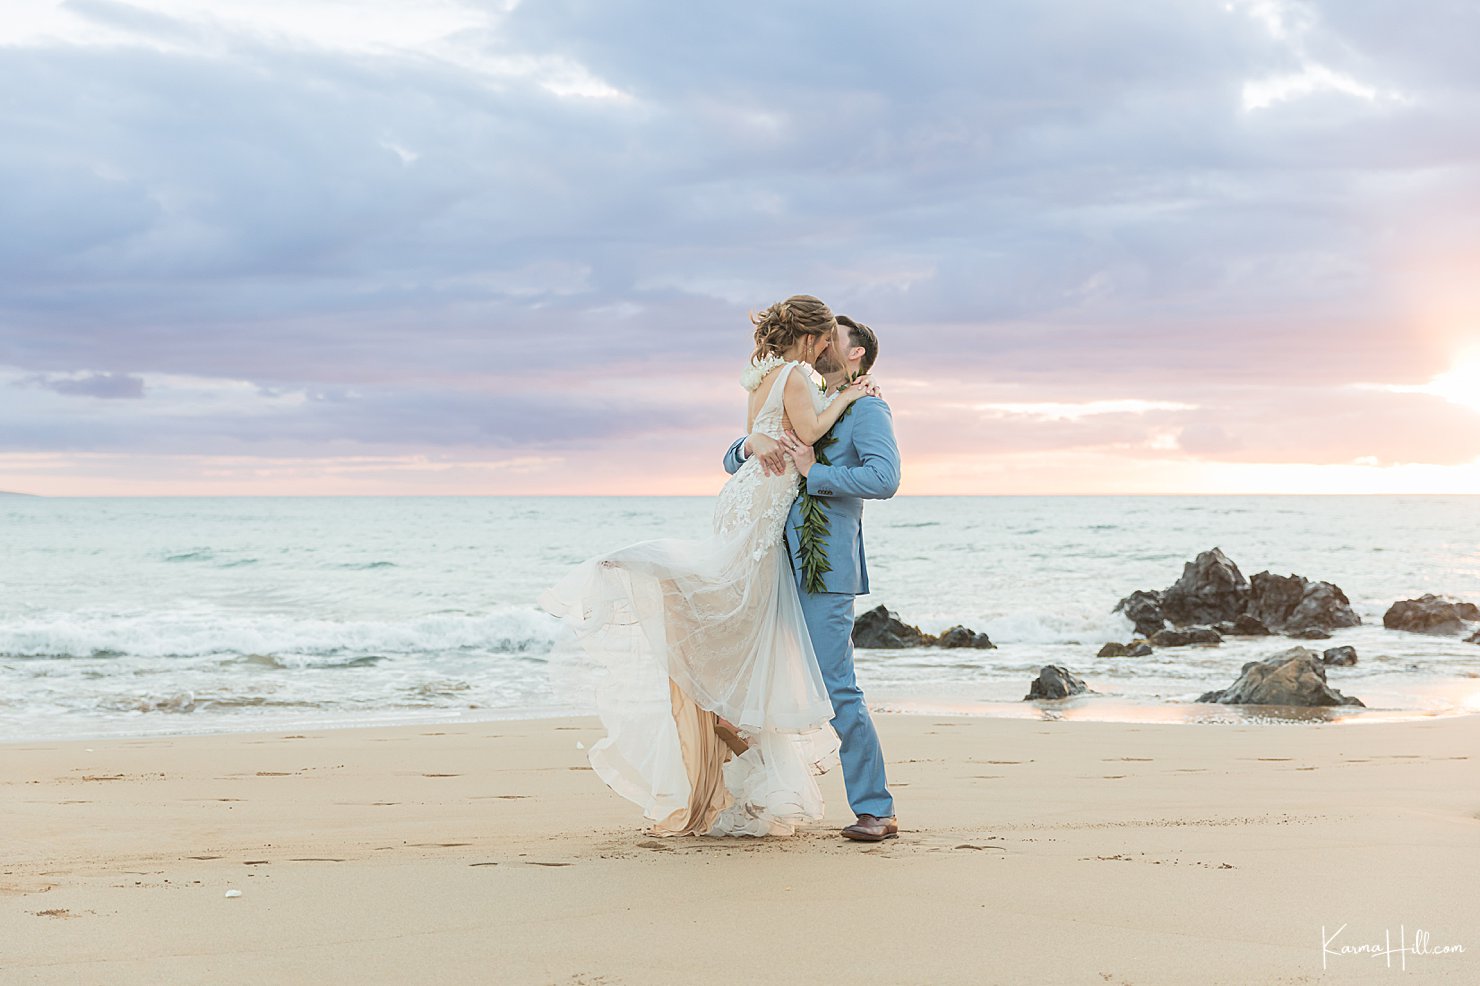 Maui wedding coordinator and photographer